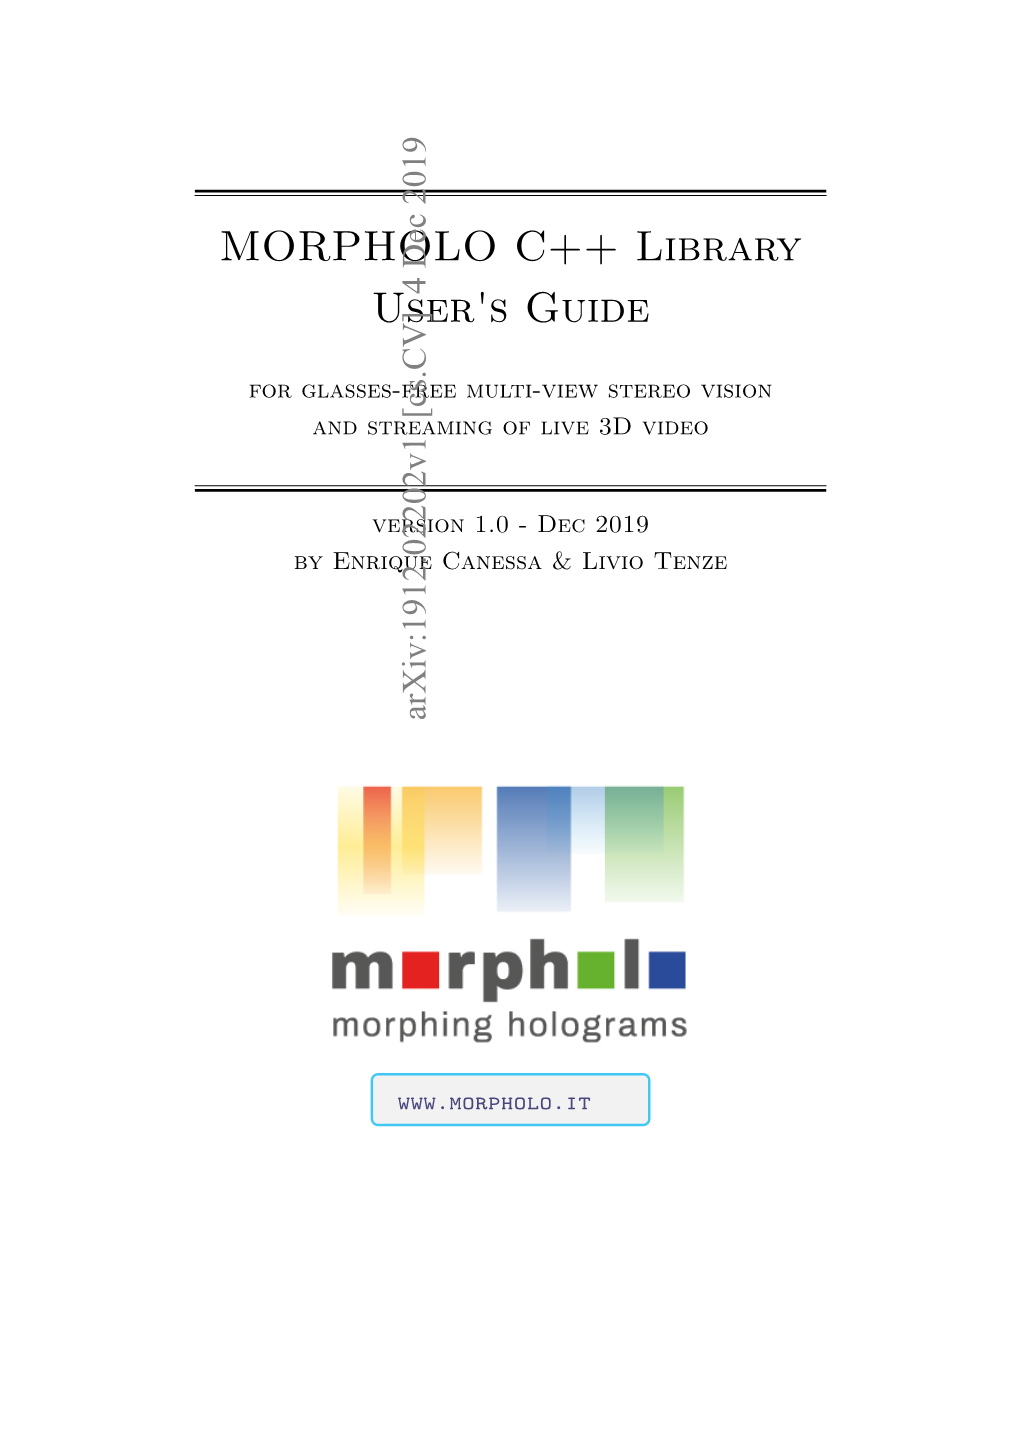 MORPHOLO C++ Library User's Guide